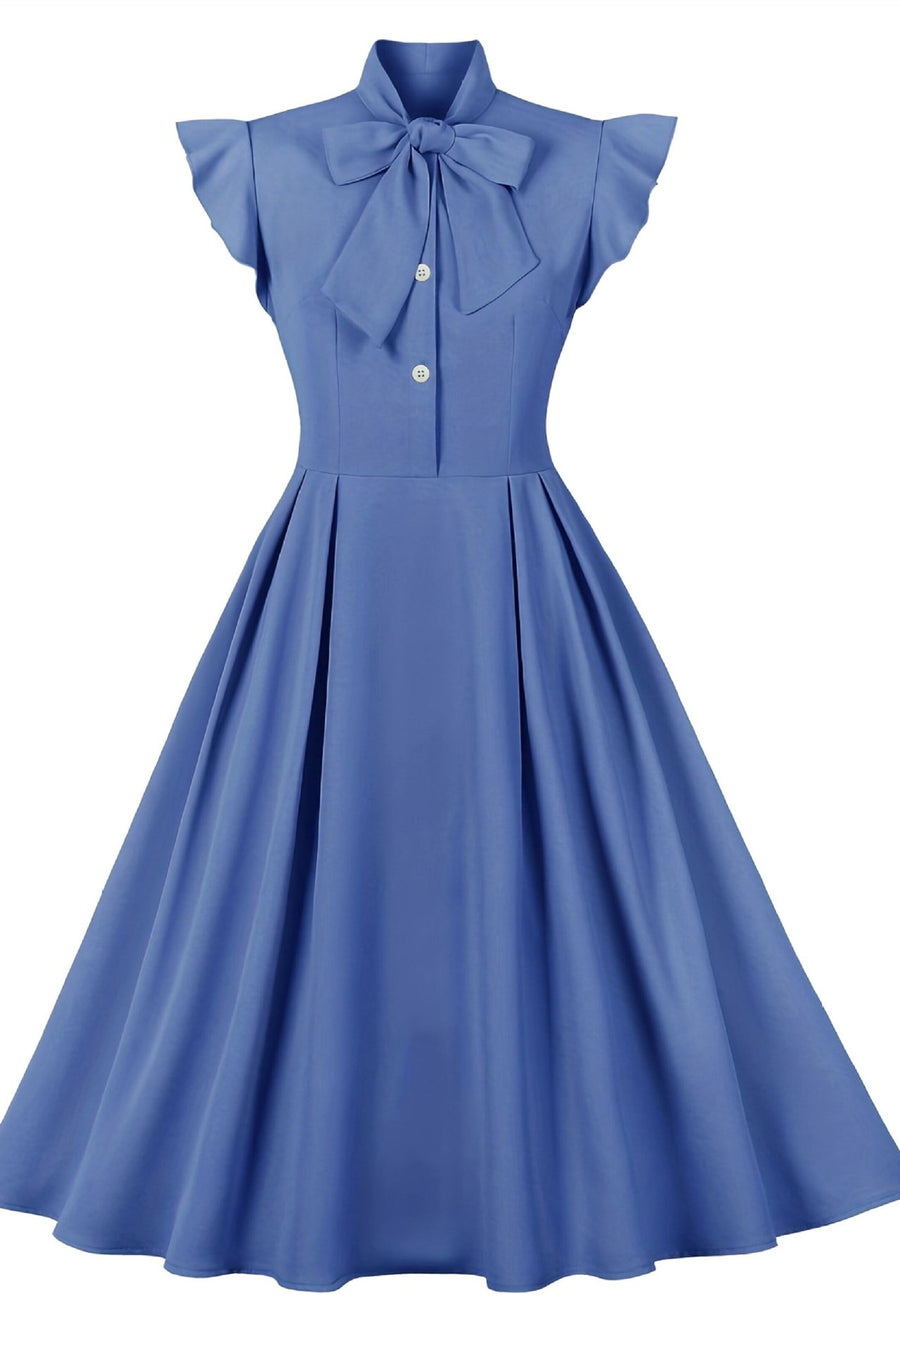 Aqua Blue Tie-Neck Flutter Sleeve A-Line Midi Dress